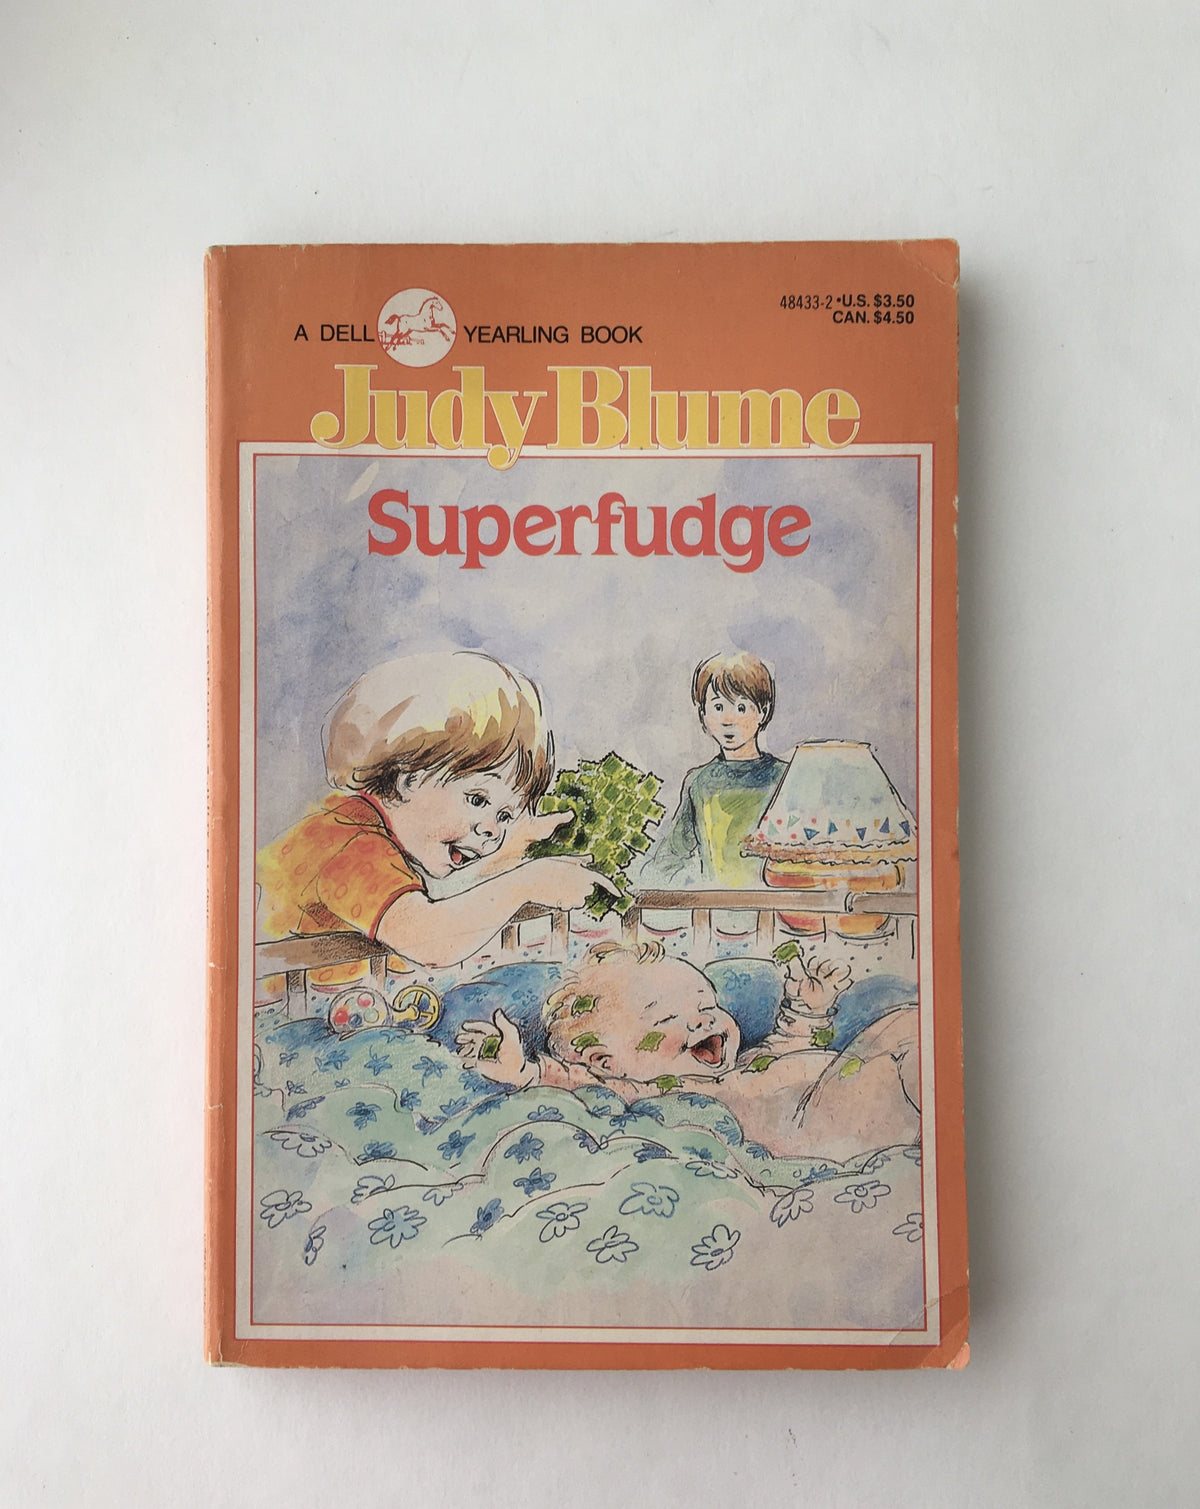 Superfudge by Judy Bloom